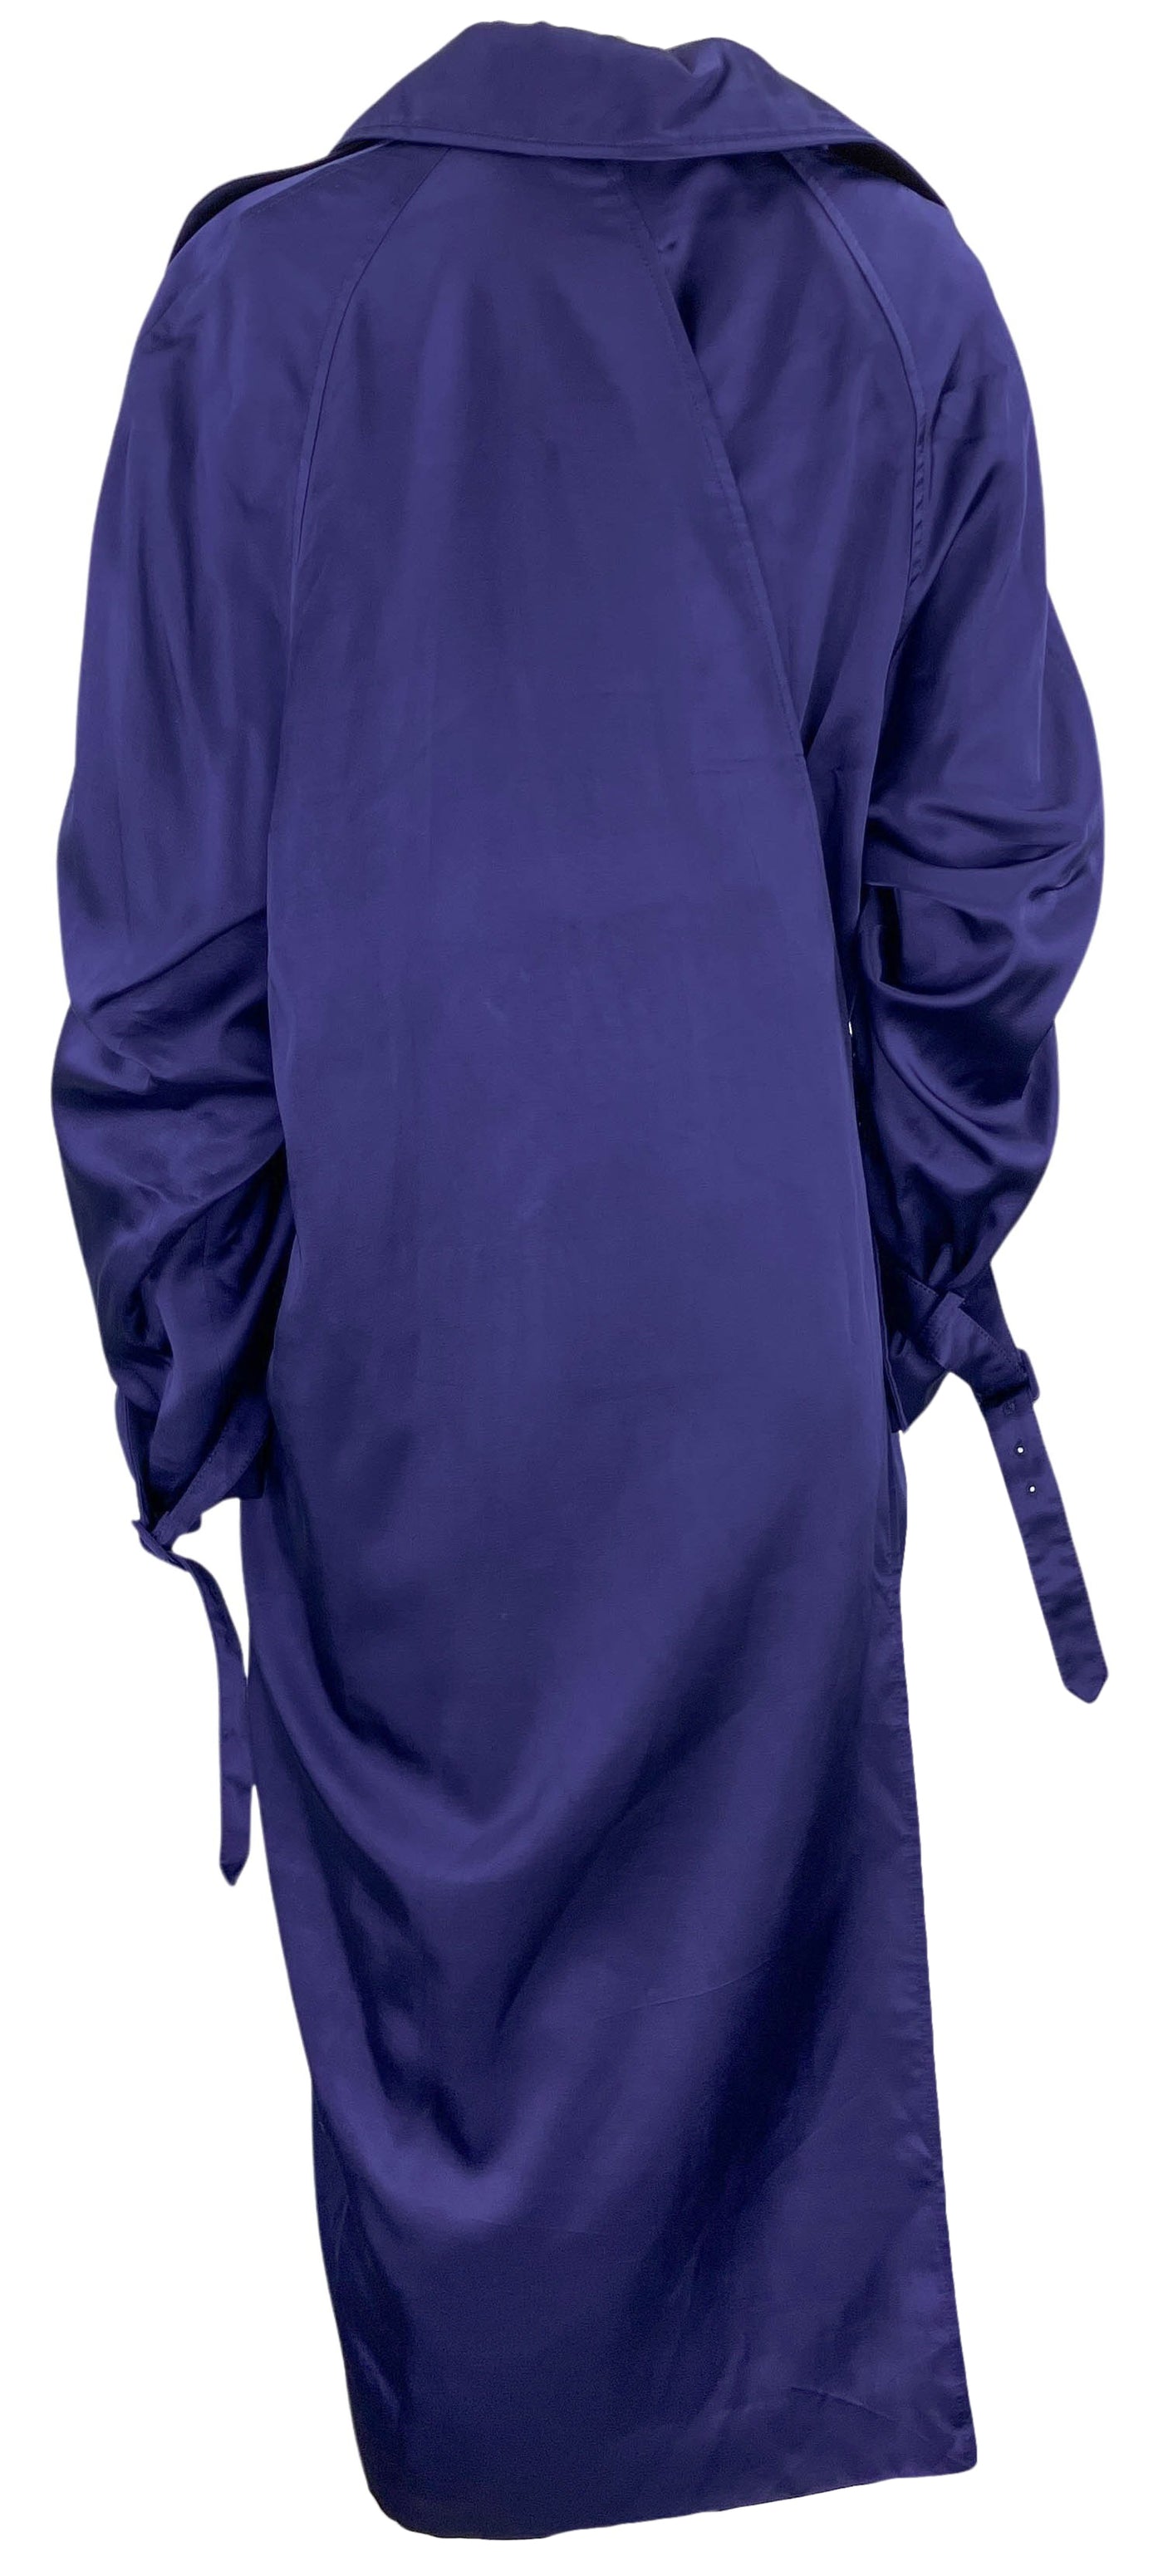 Balenciaga Satin Trench Coat in Marine Blue